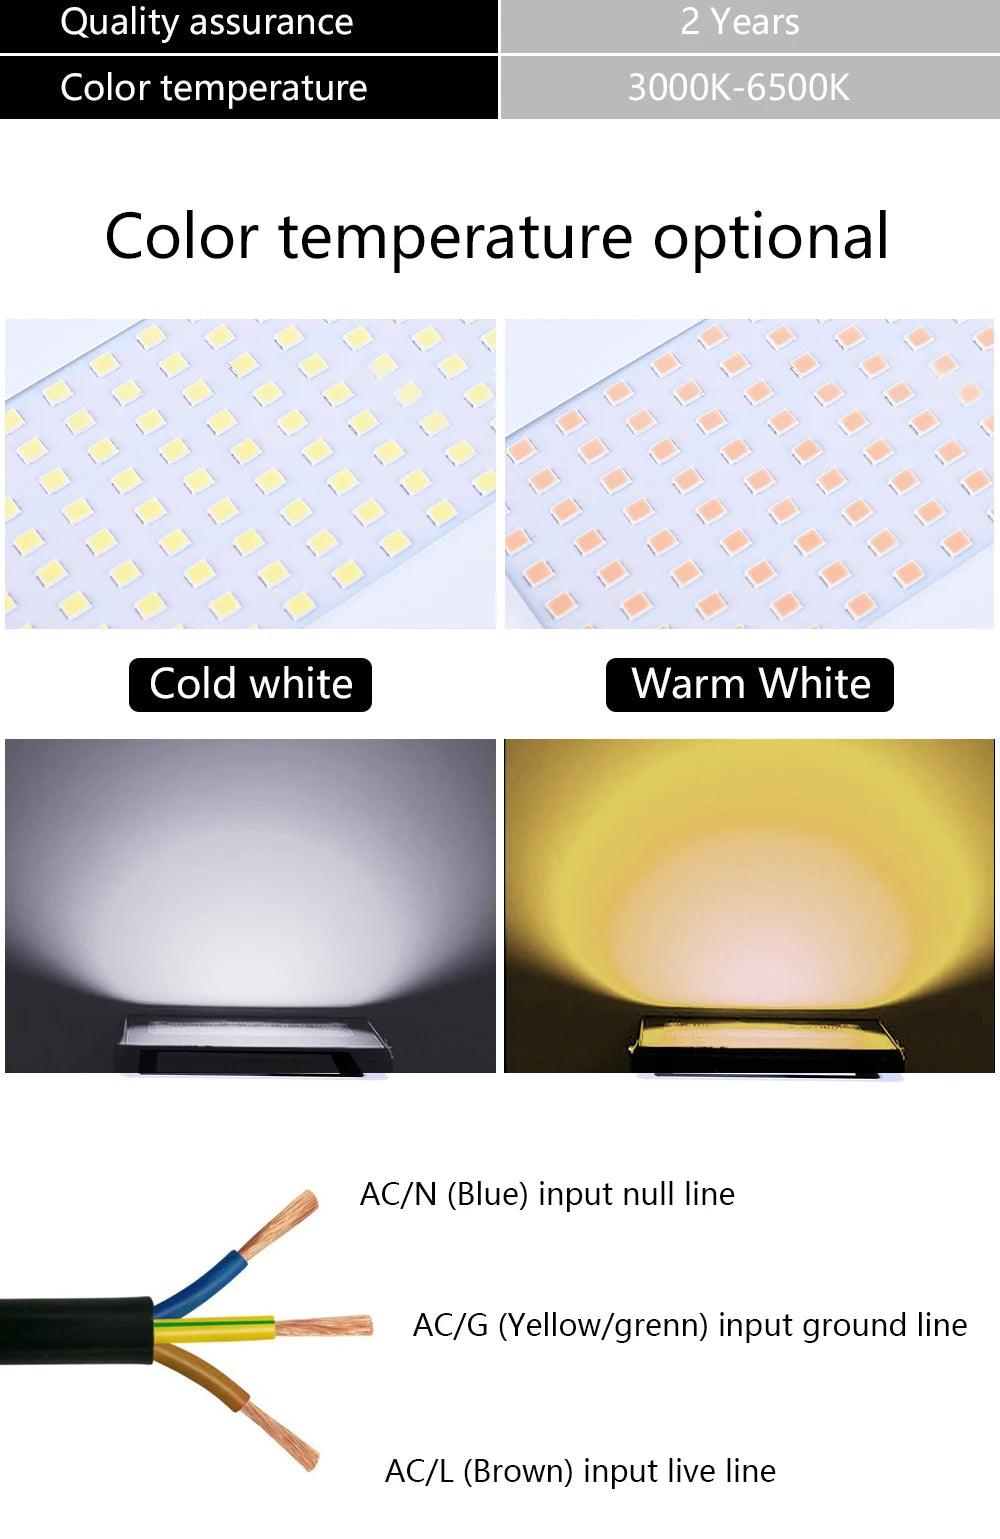 LED Flood Light, LED Light Bulb: 2-year warranty, color temp range, cold & warm white options, AC input types.